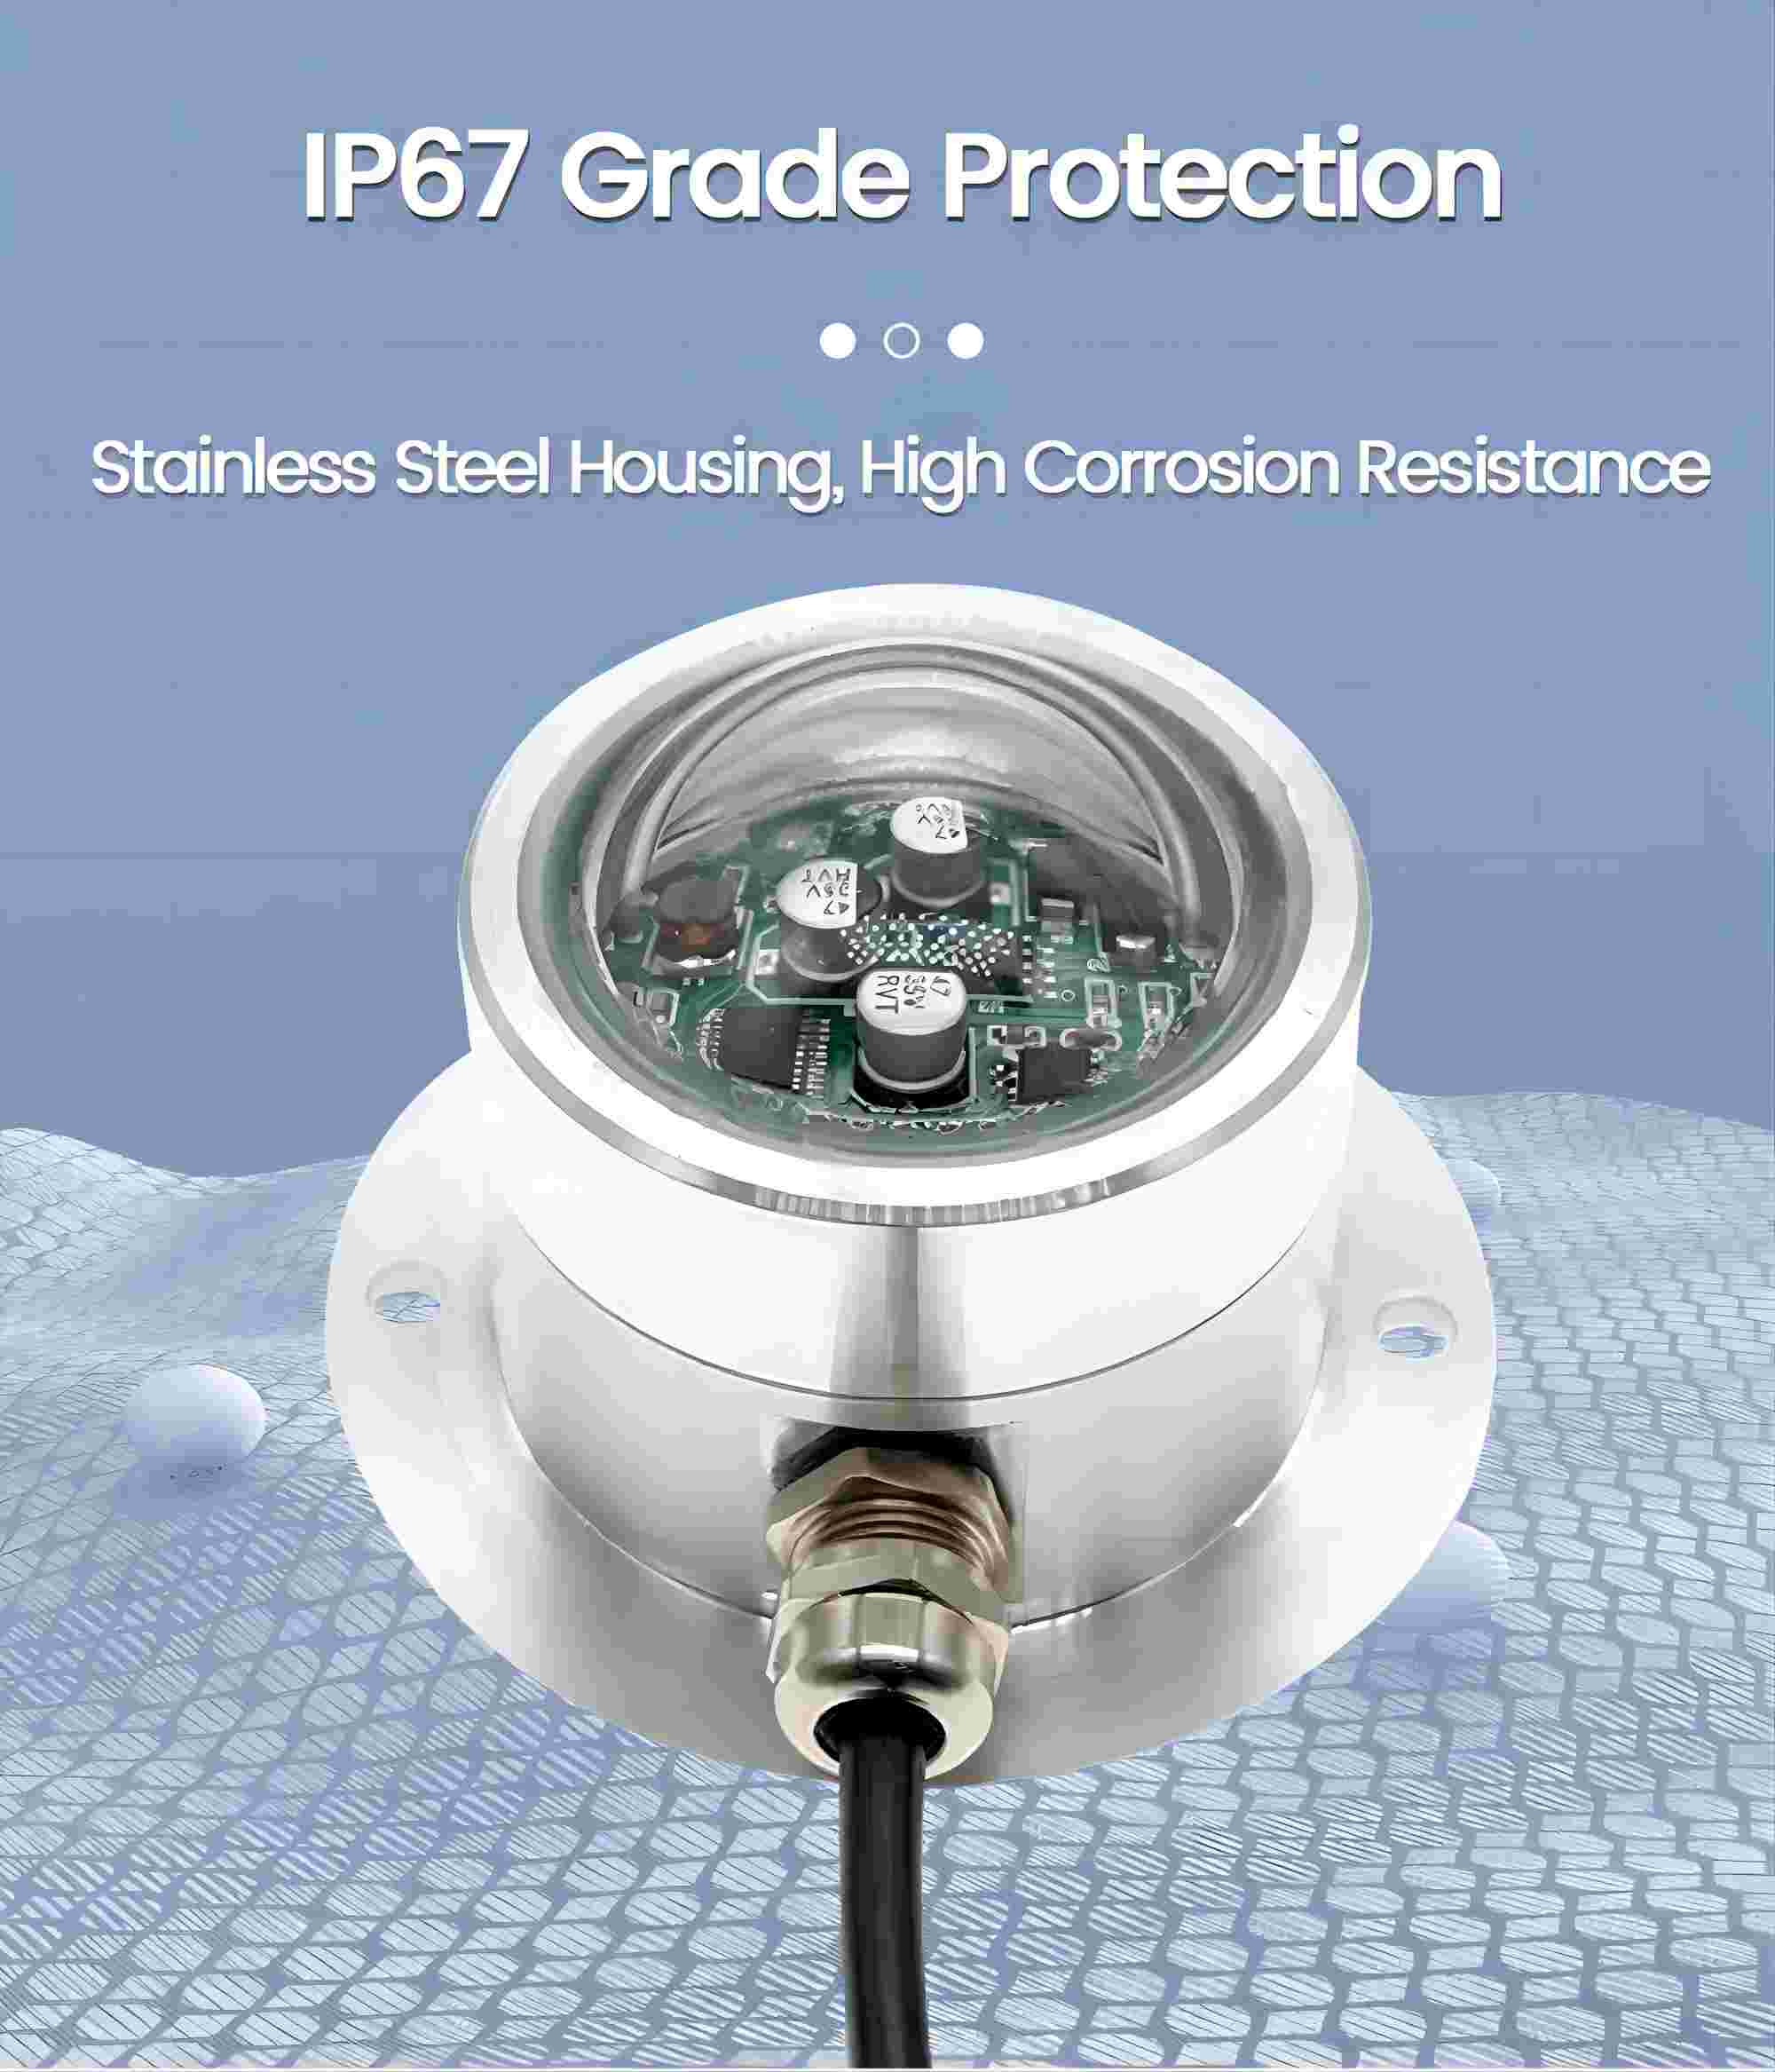 IP67 Grade Protection